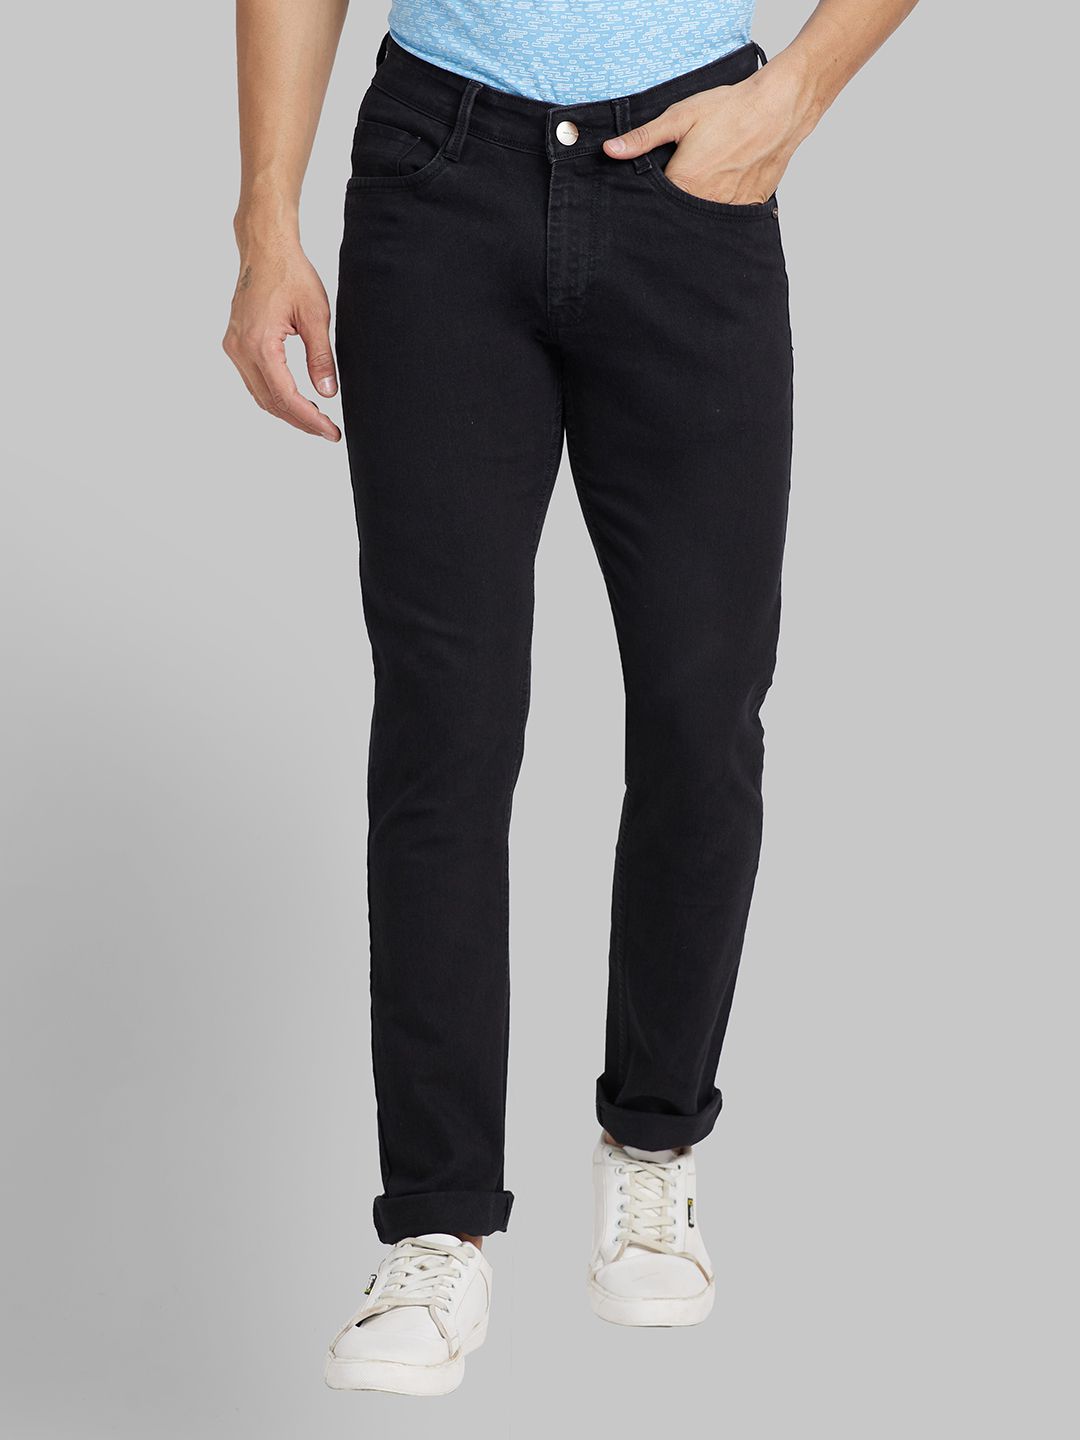     			Park Avenue Slim Fit Basic Men's Jeans - Black ( Pack of 1 )